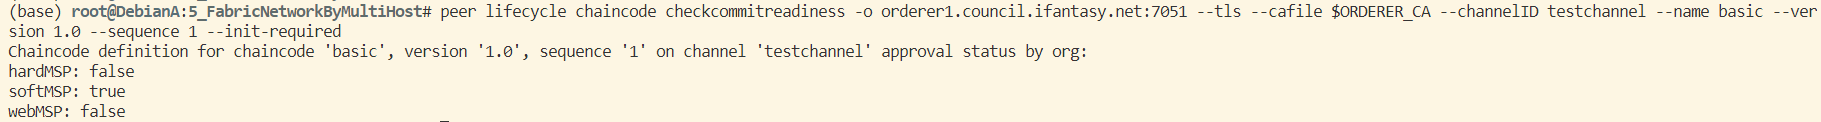 DebianA 链码批准情况1